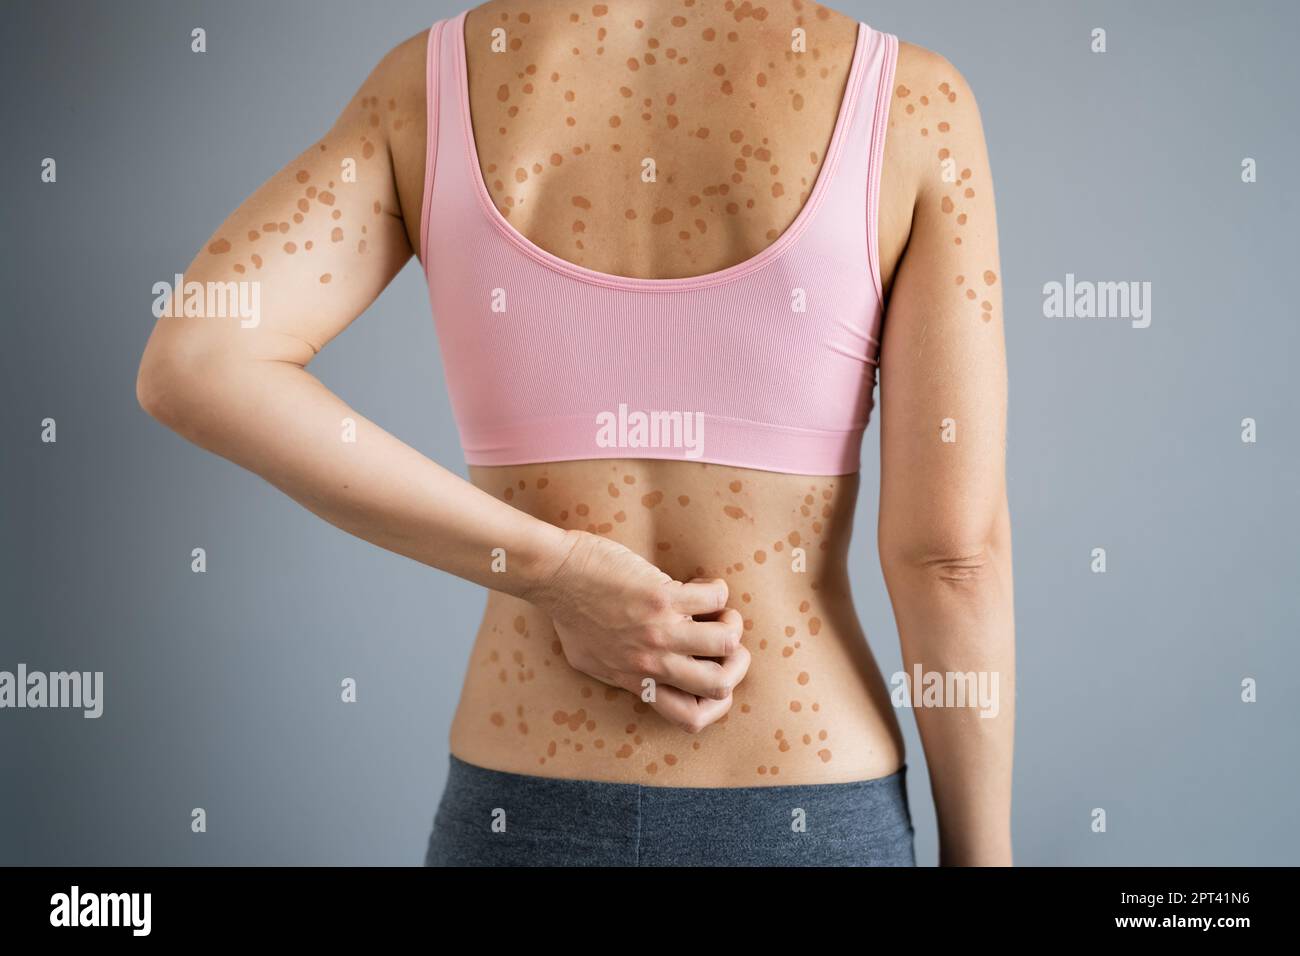 https://c8.alamy.com/comp/2PT41N6/skin-rash-and-itchy-back-acne-dry-eczema-allergy-2PT41N6.jpg